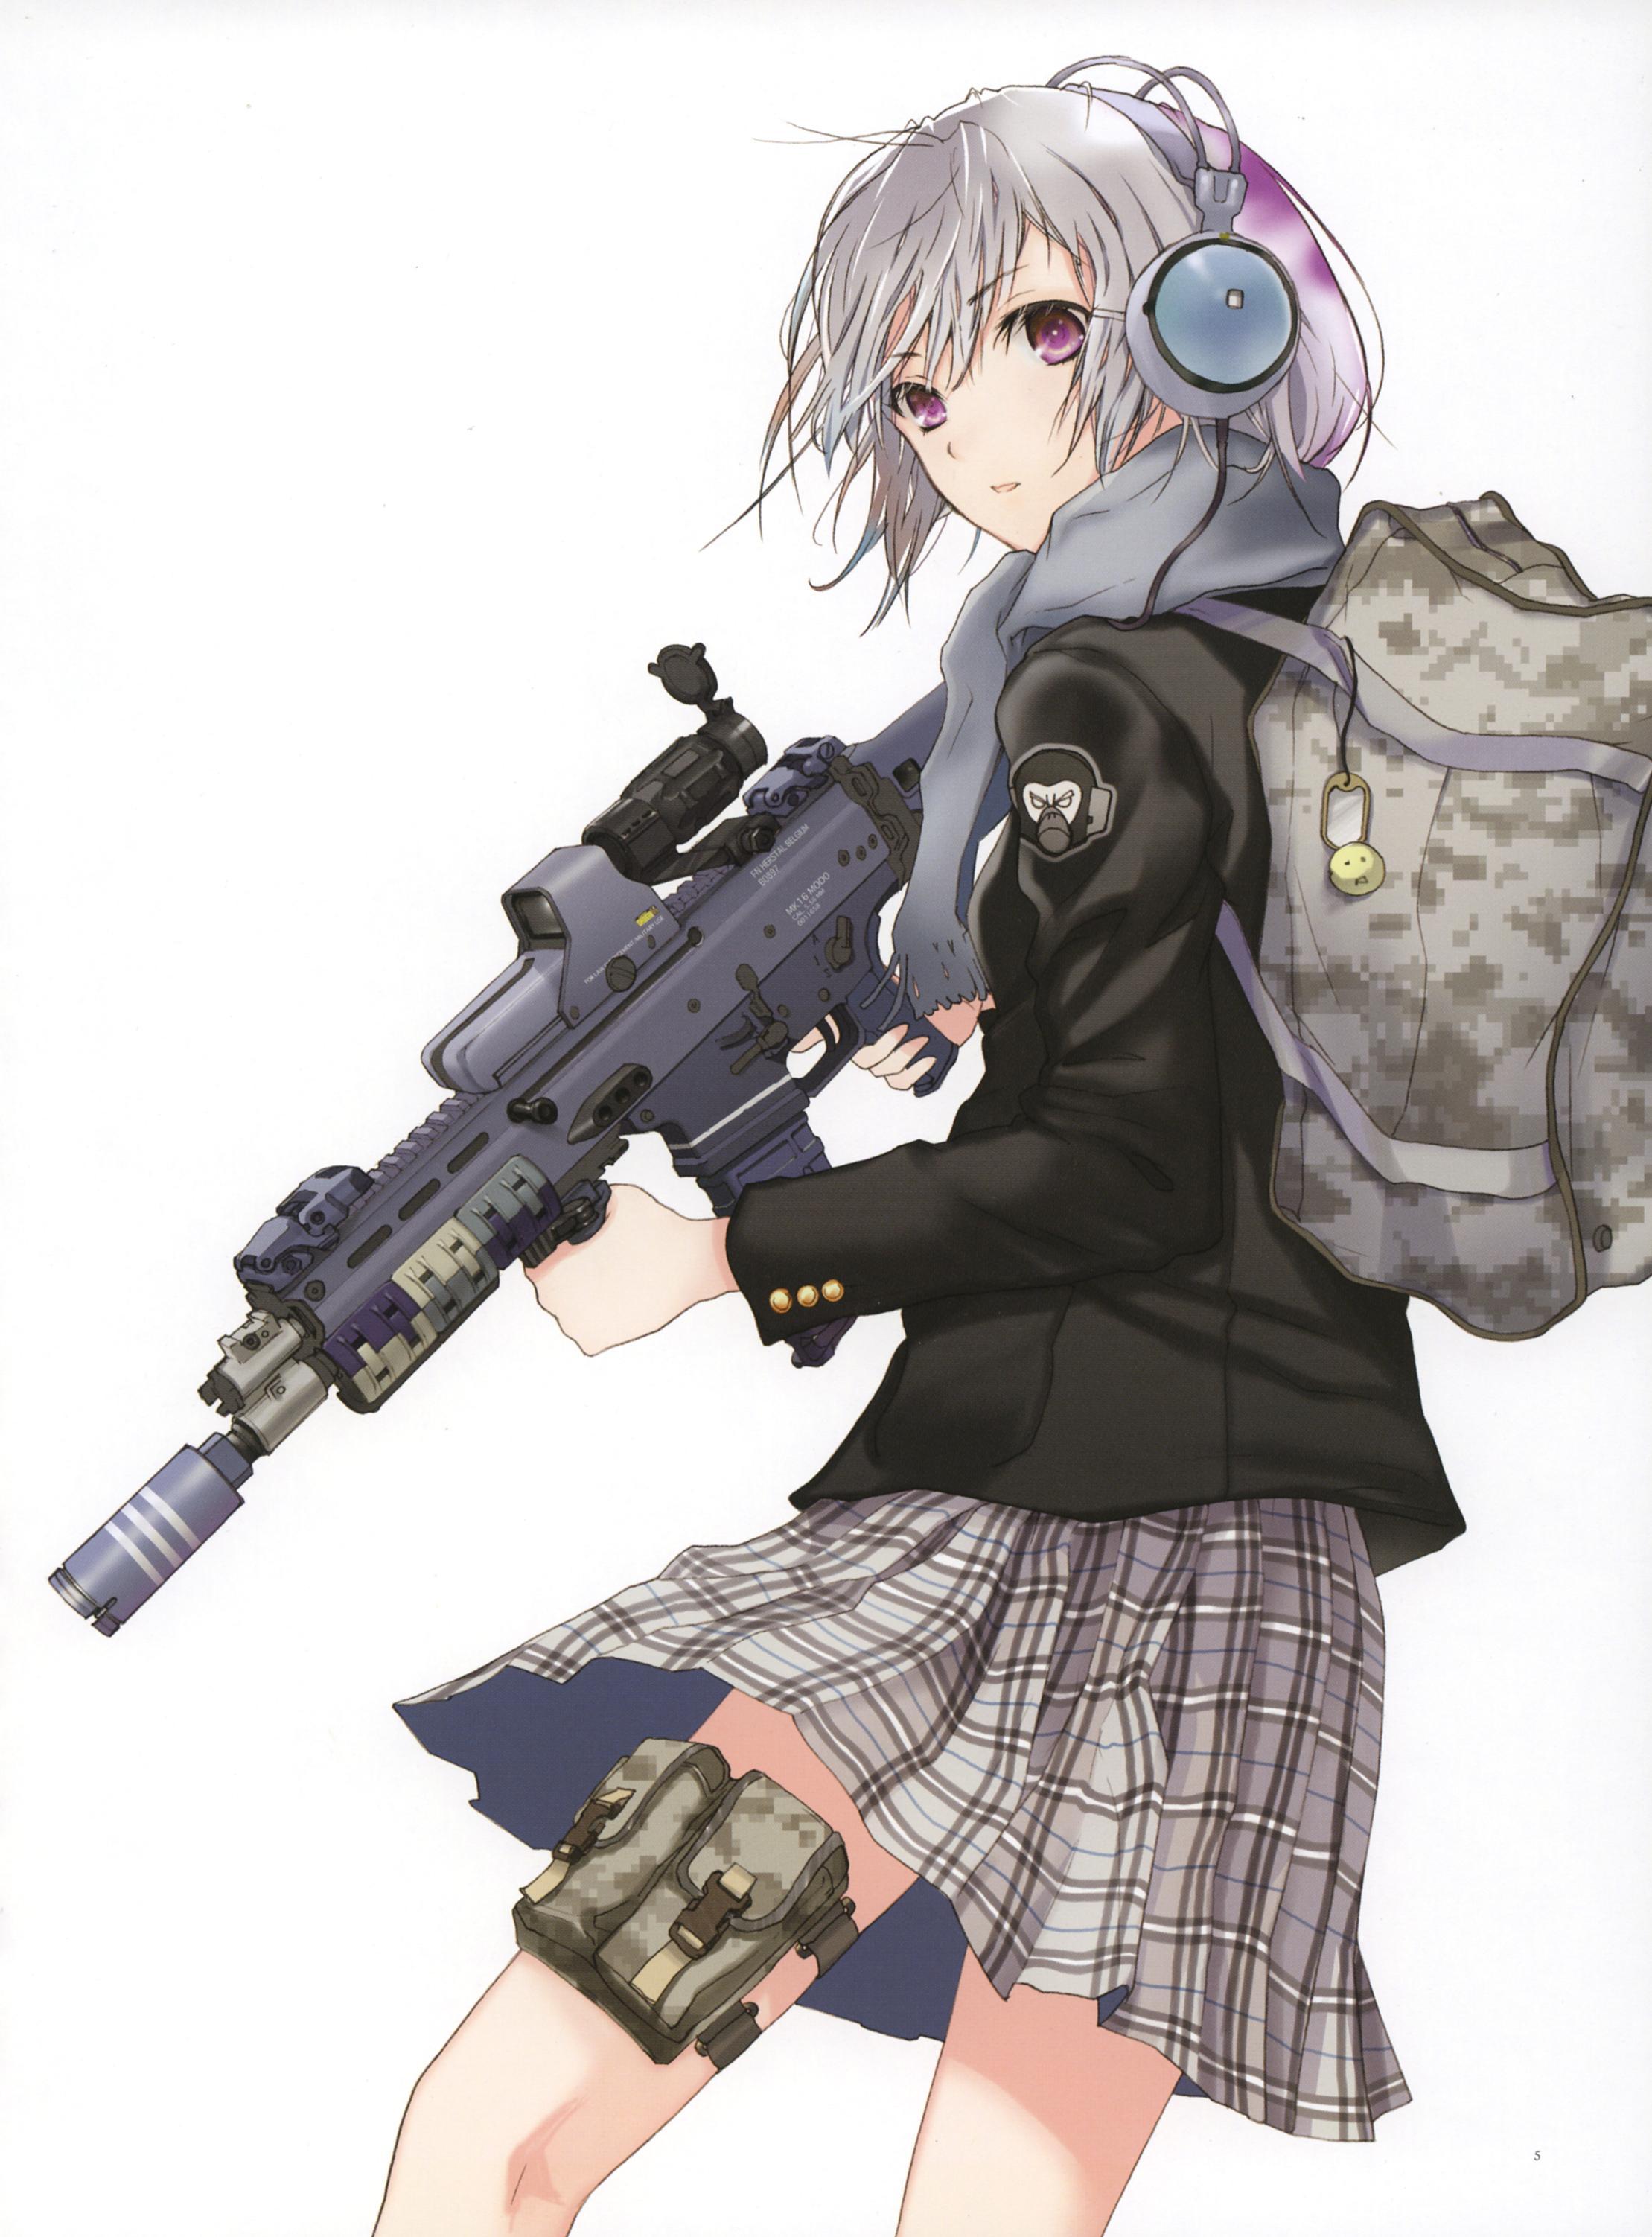 headphones, skirts, weapons, Fuyuno Haruaki, assault rifle